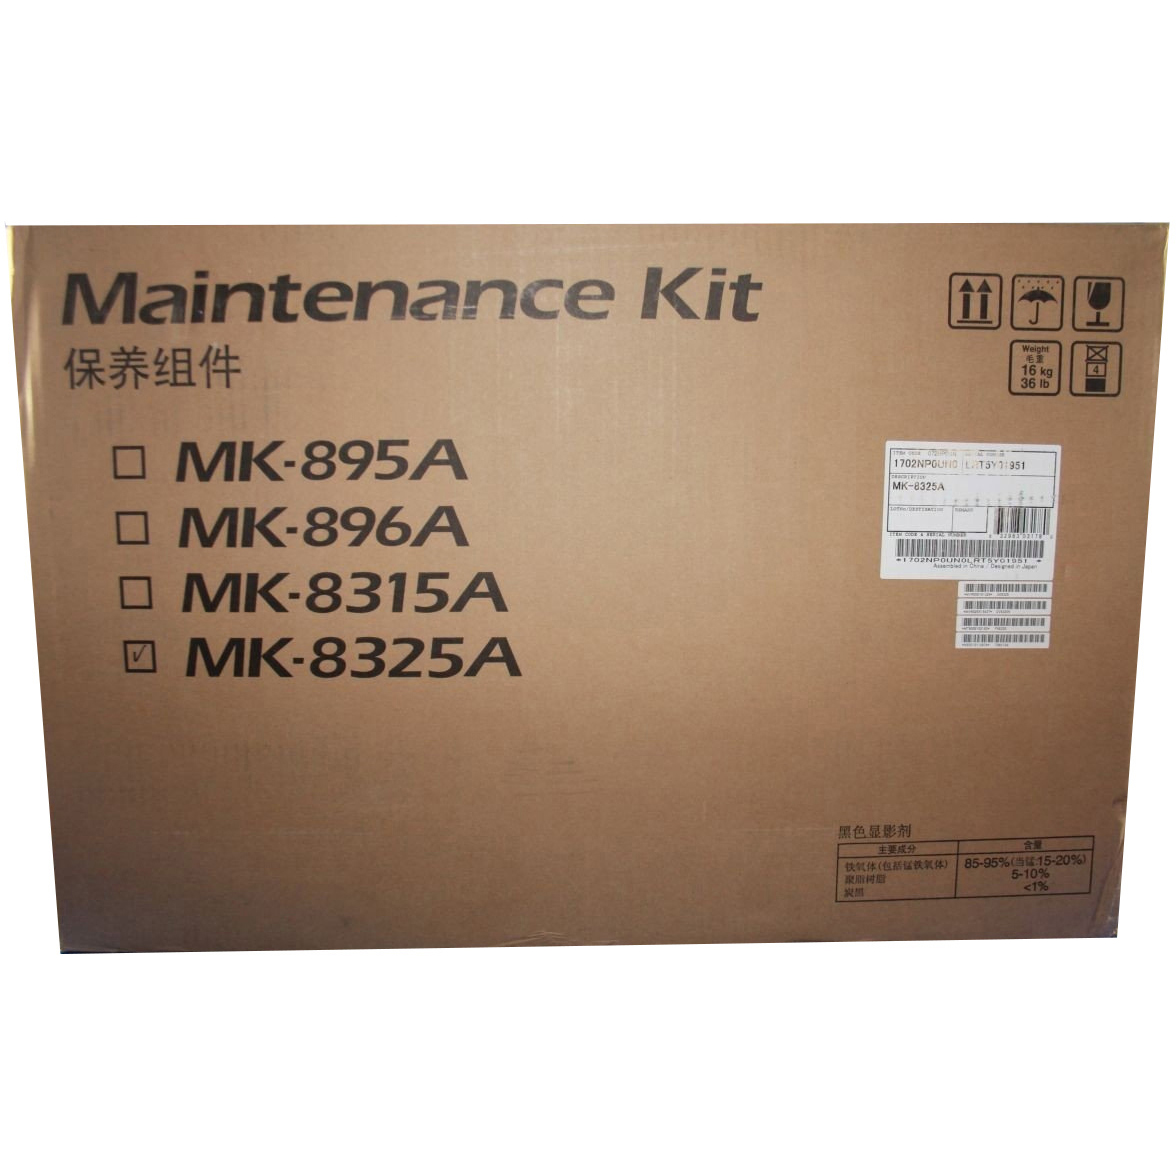 Original Kyocera 1702NP0UN0 Maintenance Kit (MK-8325A)